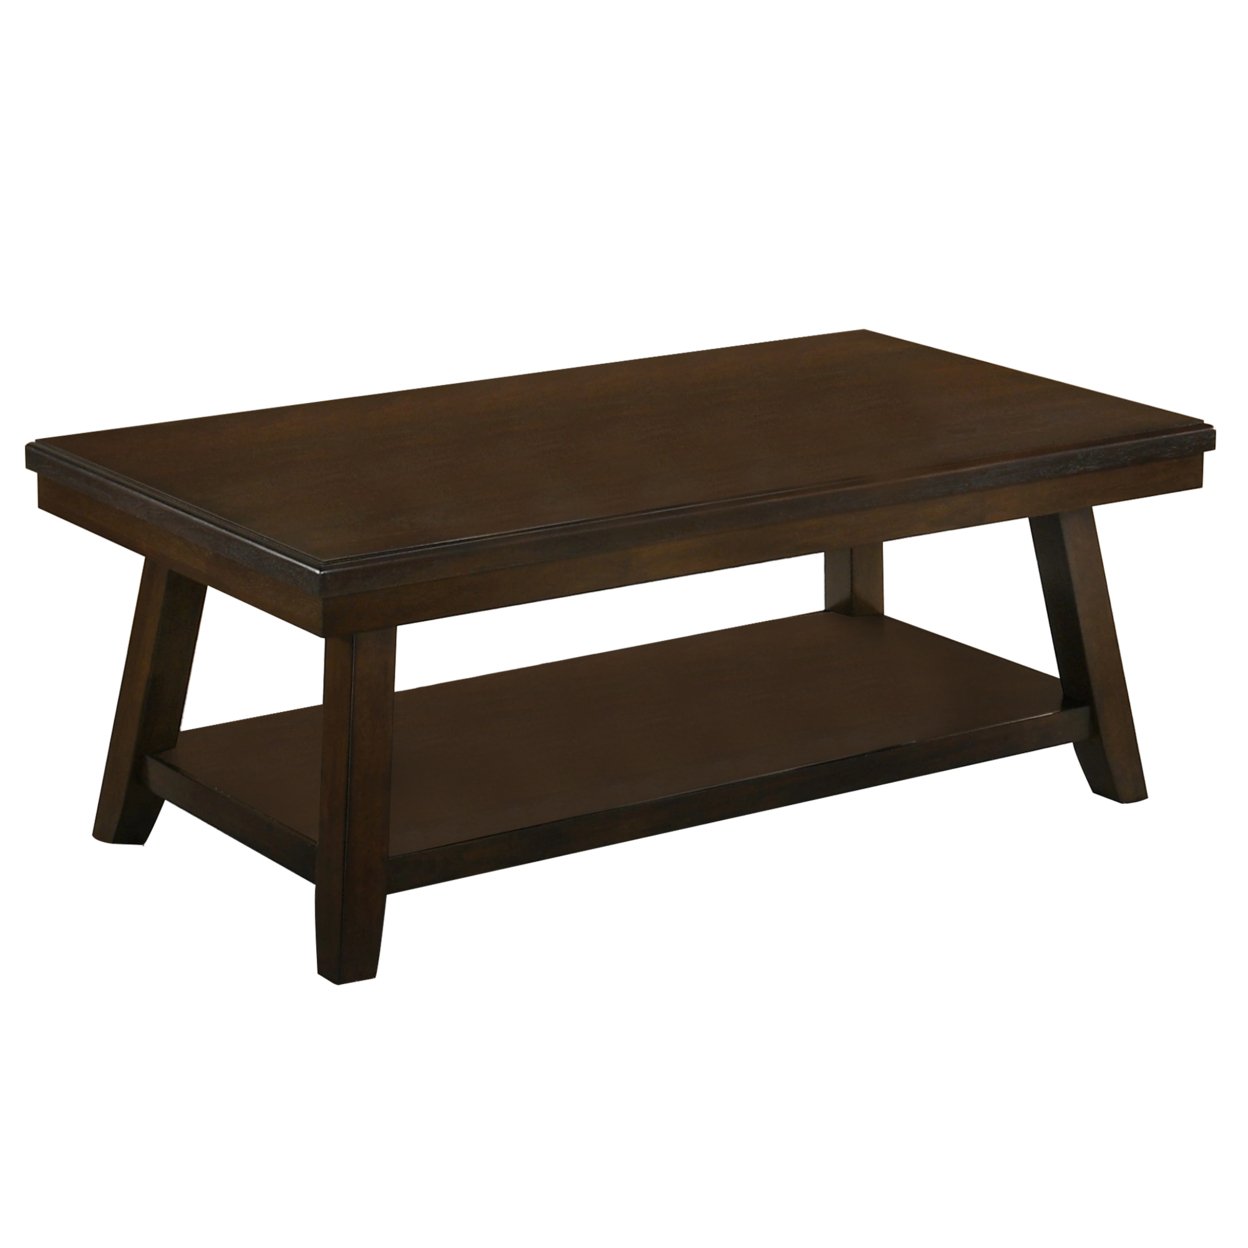 Wooden Coffee Table With One Open Shelf, Brown- Saltoro Sherpi